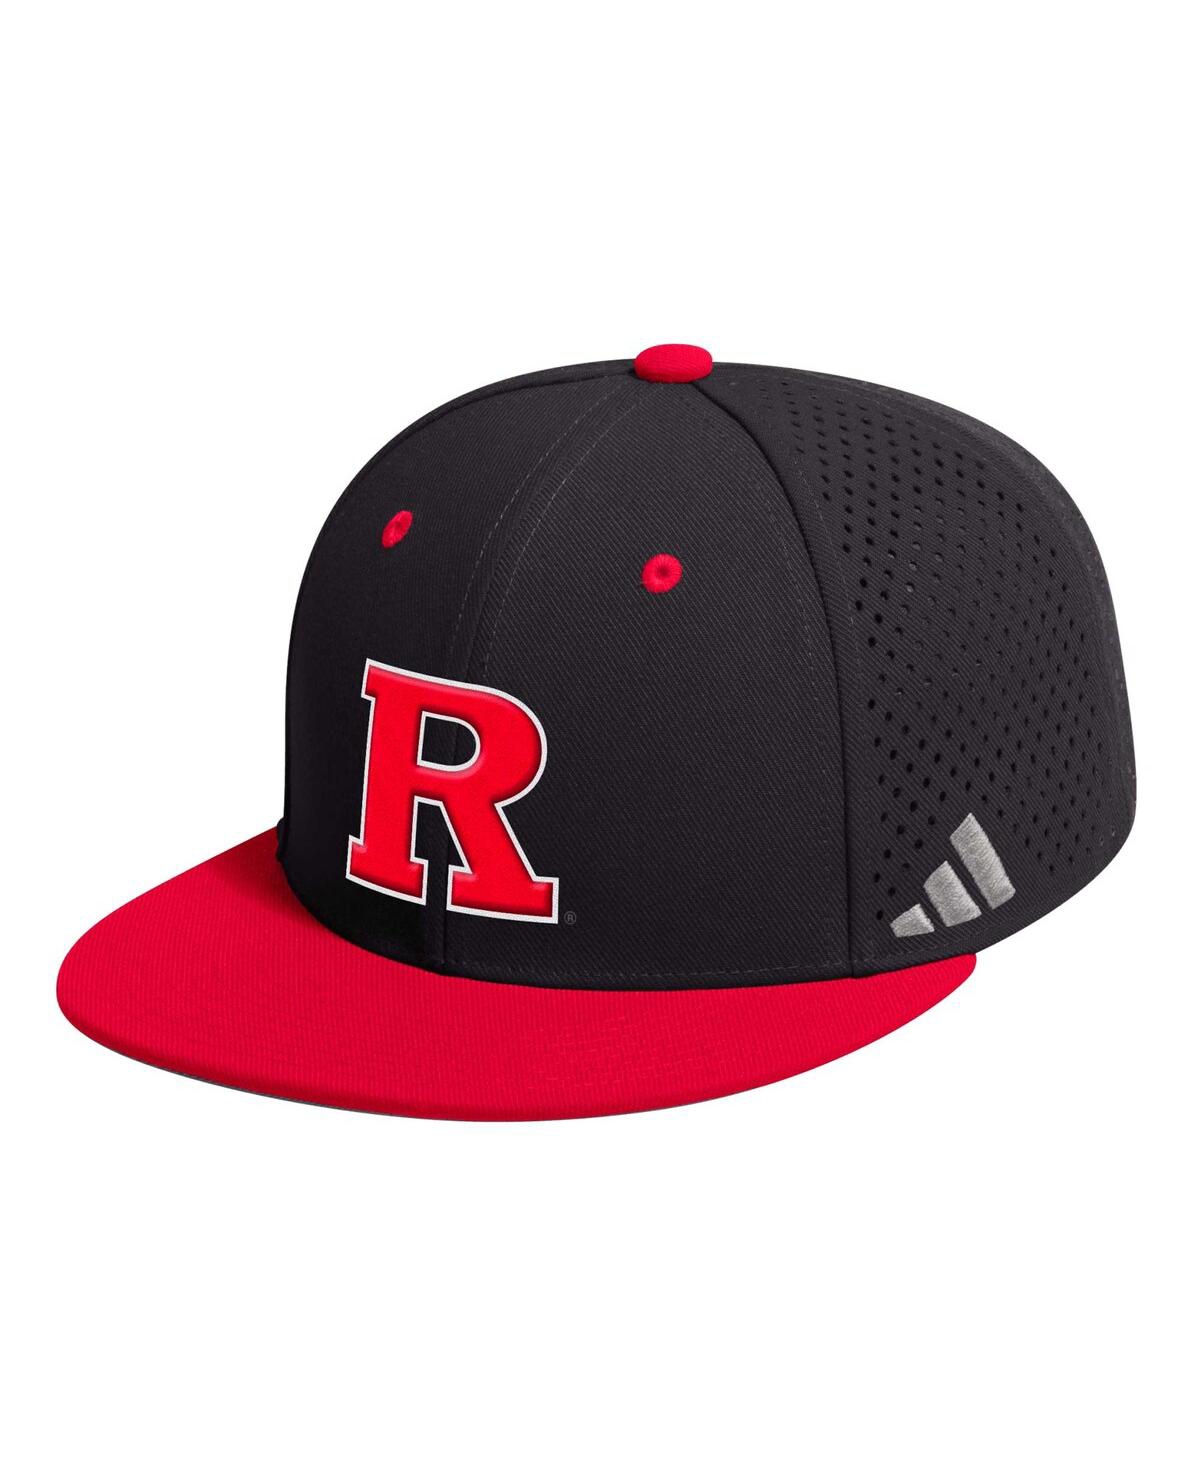 Shop Adidas Originals Men's Adidas Black Rutgers Scarlet Knights On-field Baseball Fitted Hat